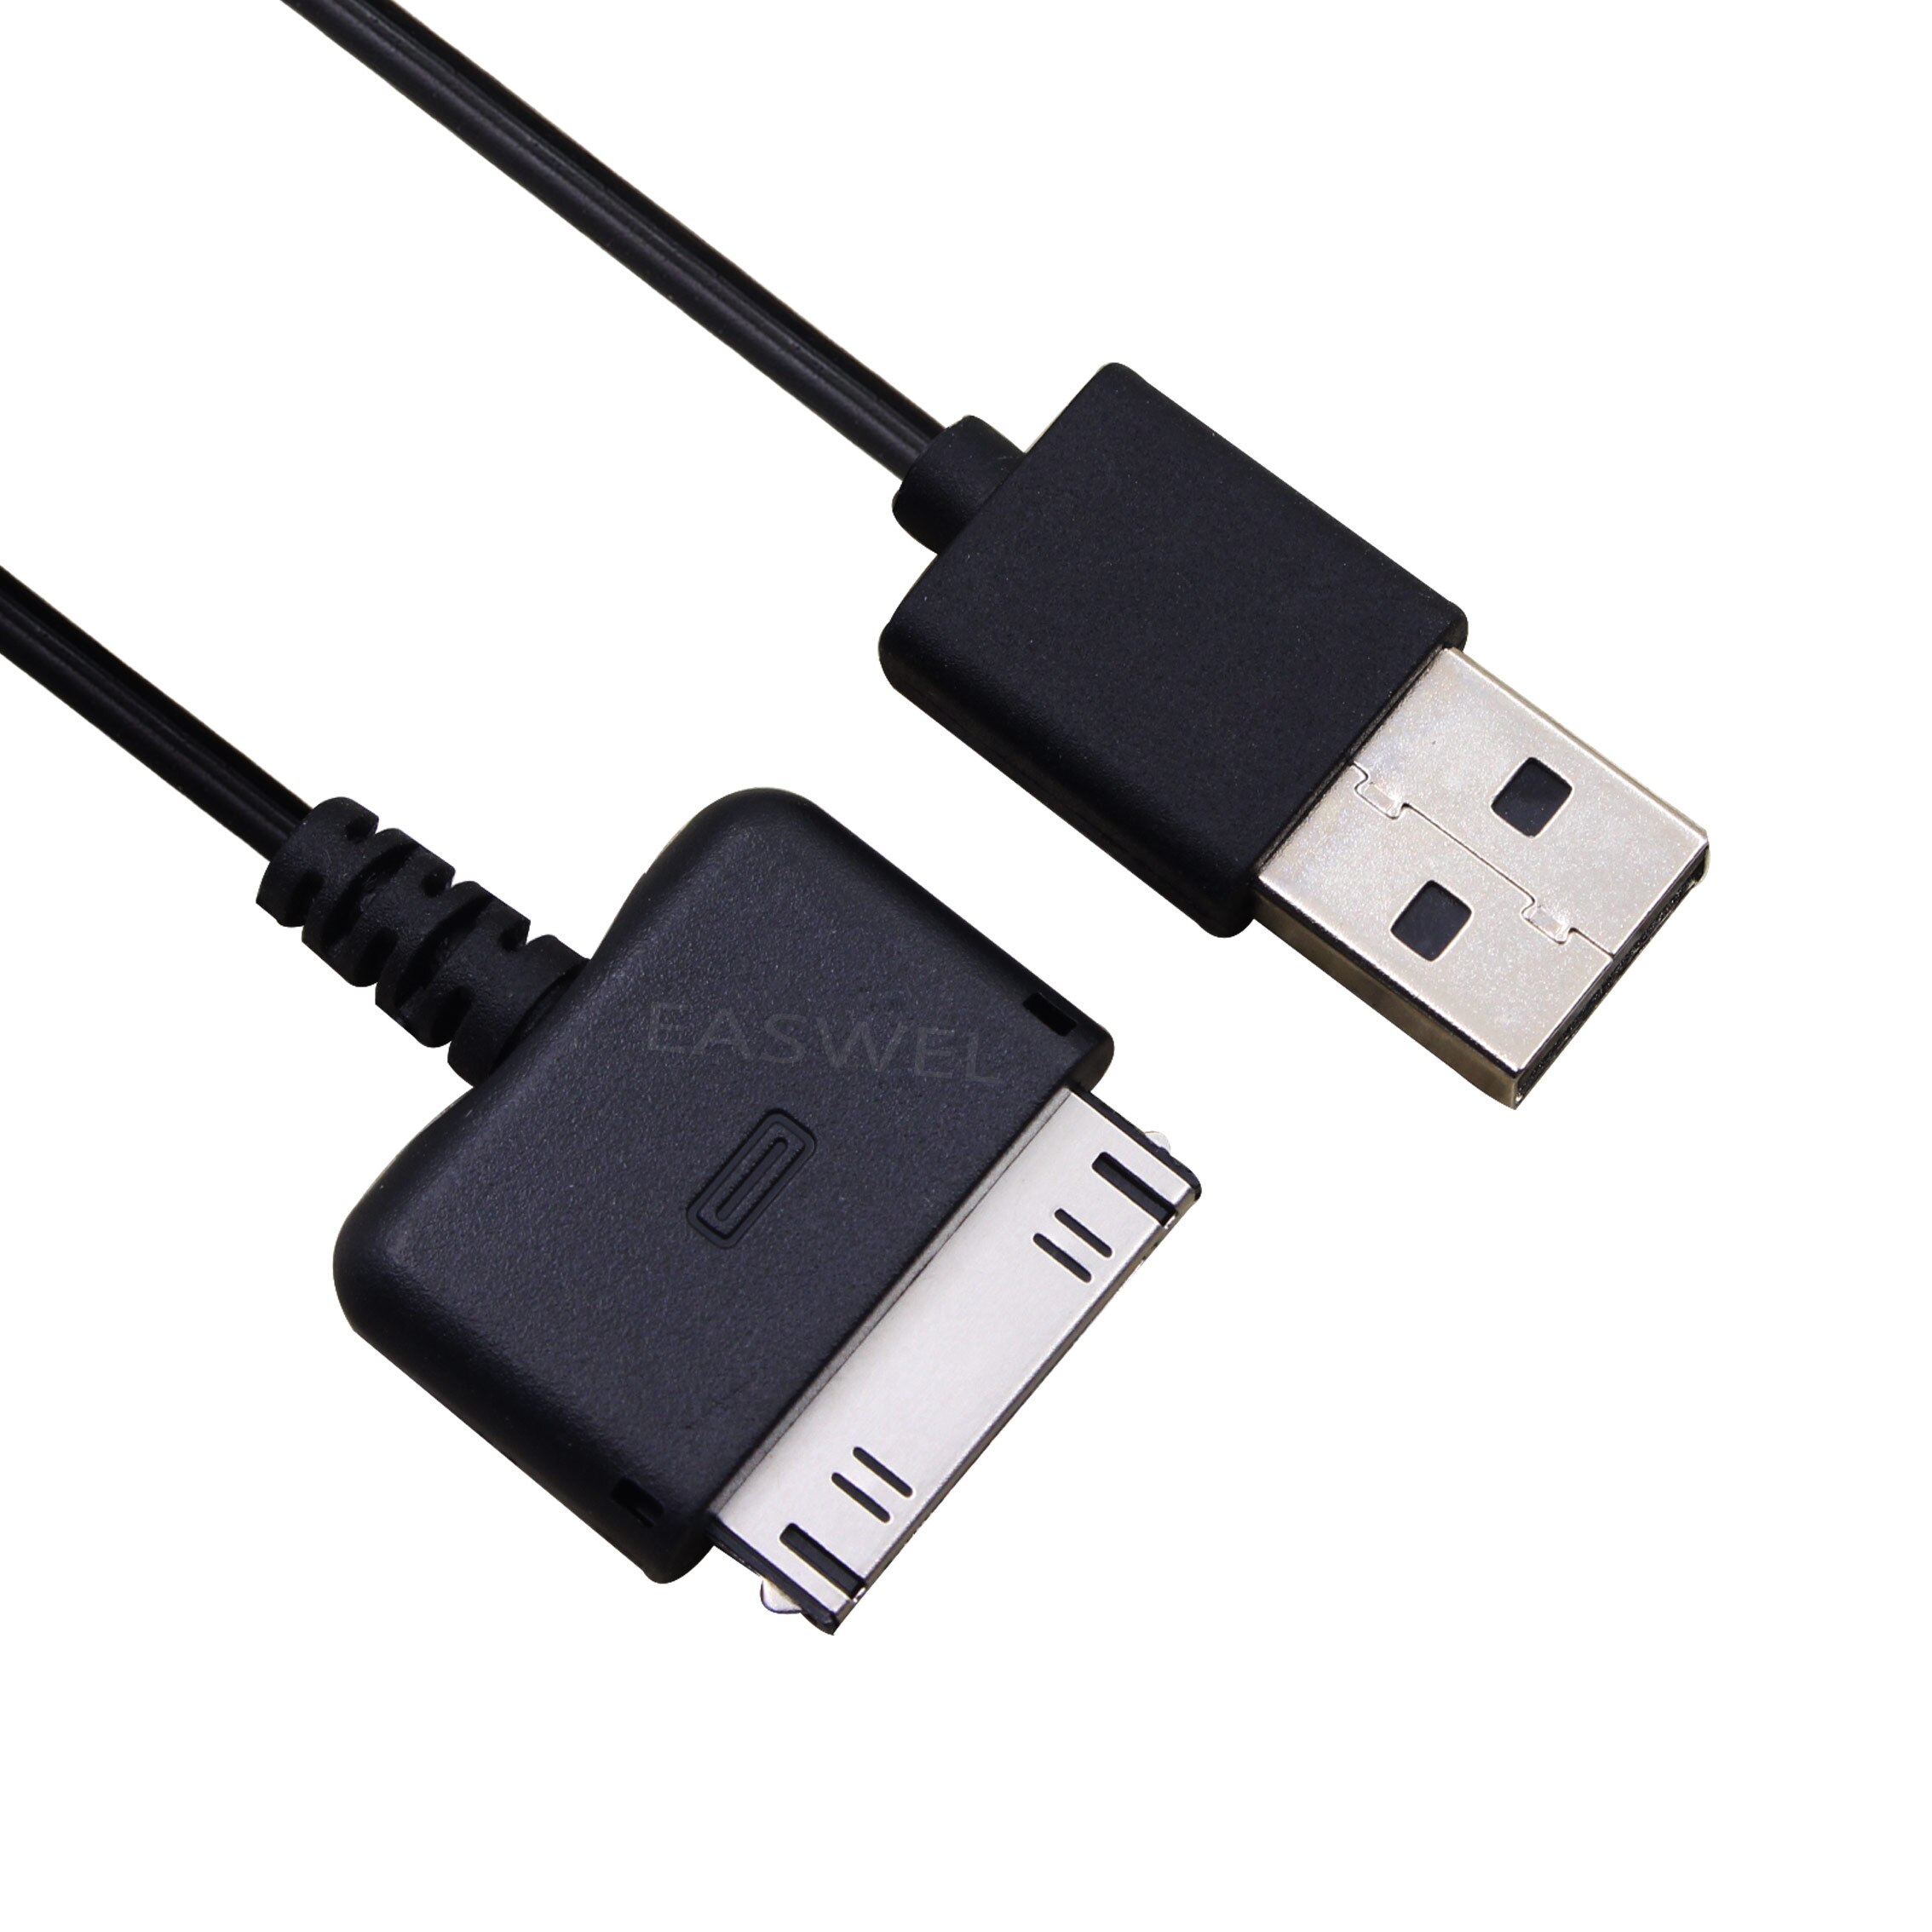 Generieke USB Data Sync Kabel Power Charger Cord voor NOOK HD + 9 BNTV600 16GB 32GB